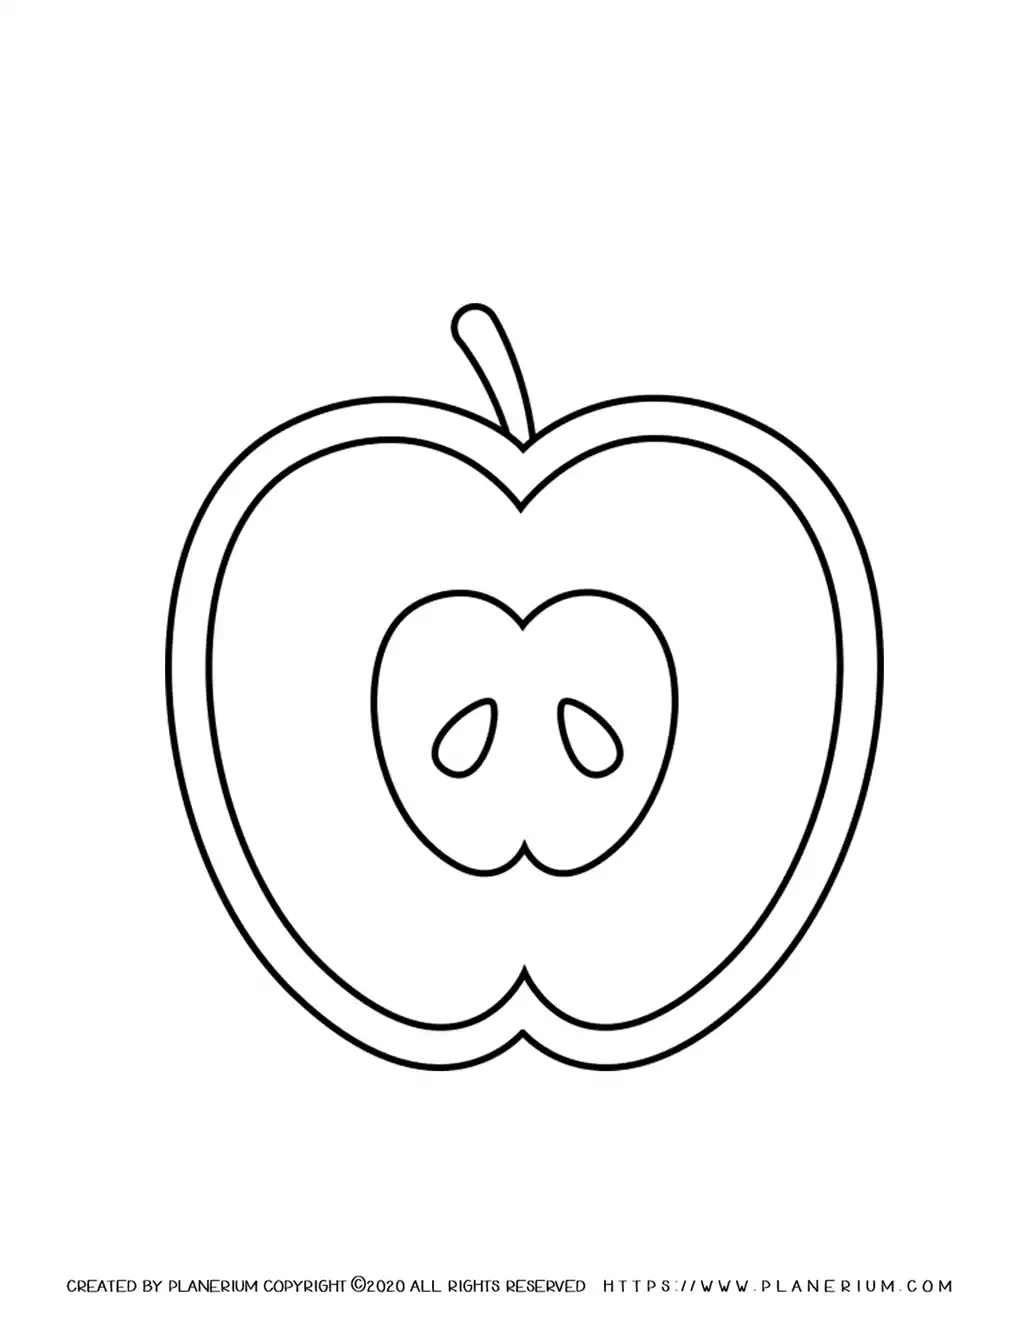 Rosh Hashanah - Coloring Pages - Half Apple | Planerium